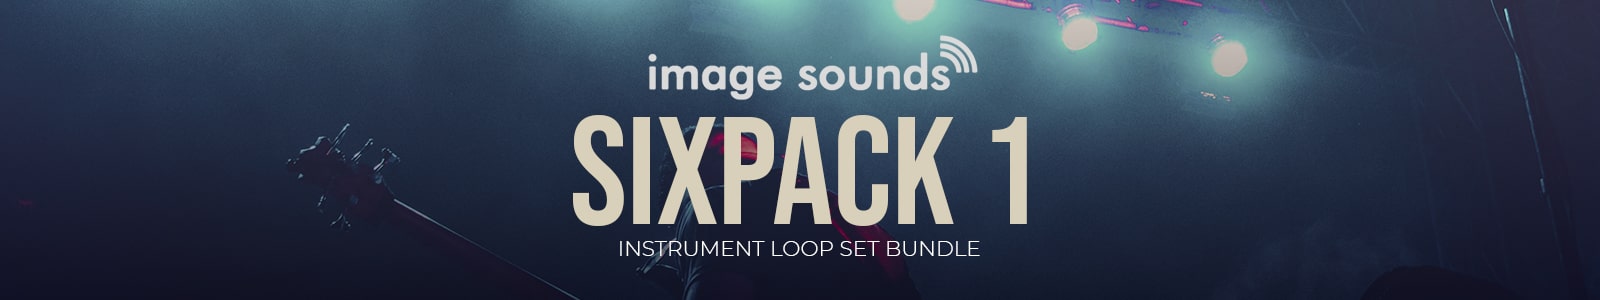 SIXPACK 1 - Instrument Loop Set Bundle by Image Sound